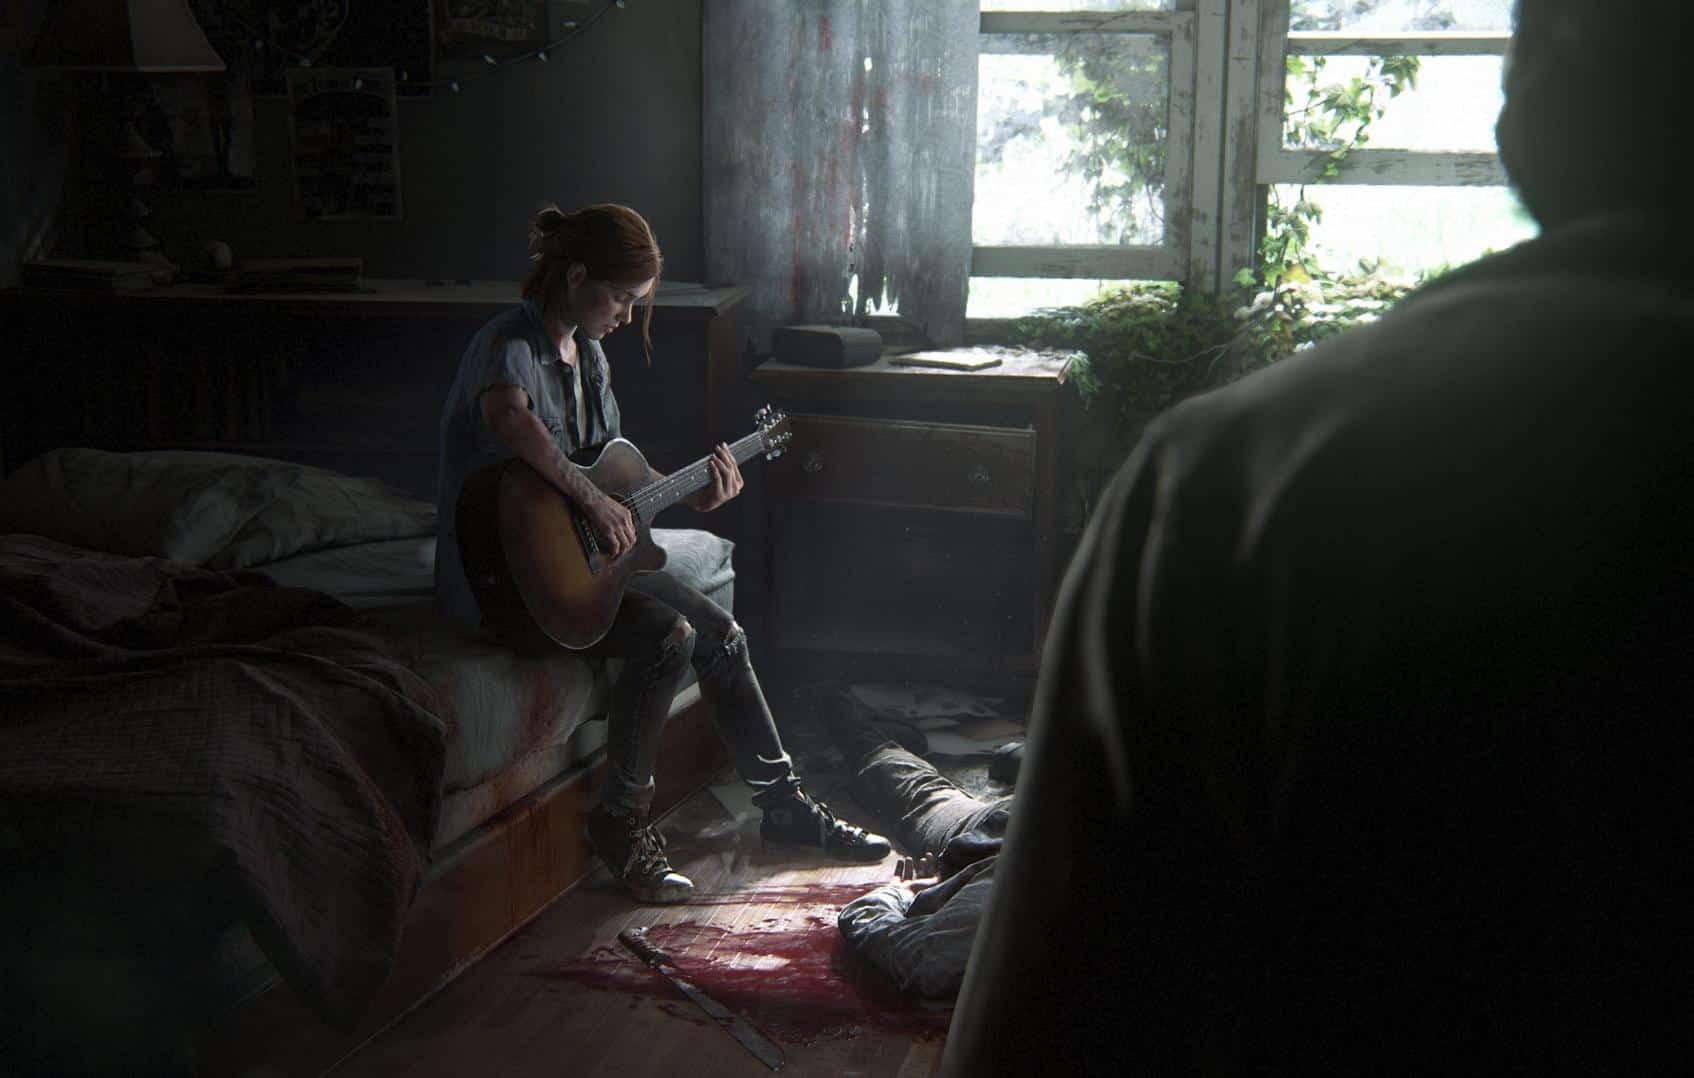 Boatos sobre The Last of Us 2 para PC se espalham - Memória BIT